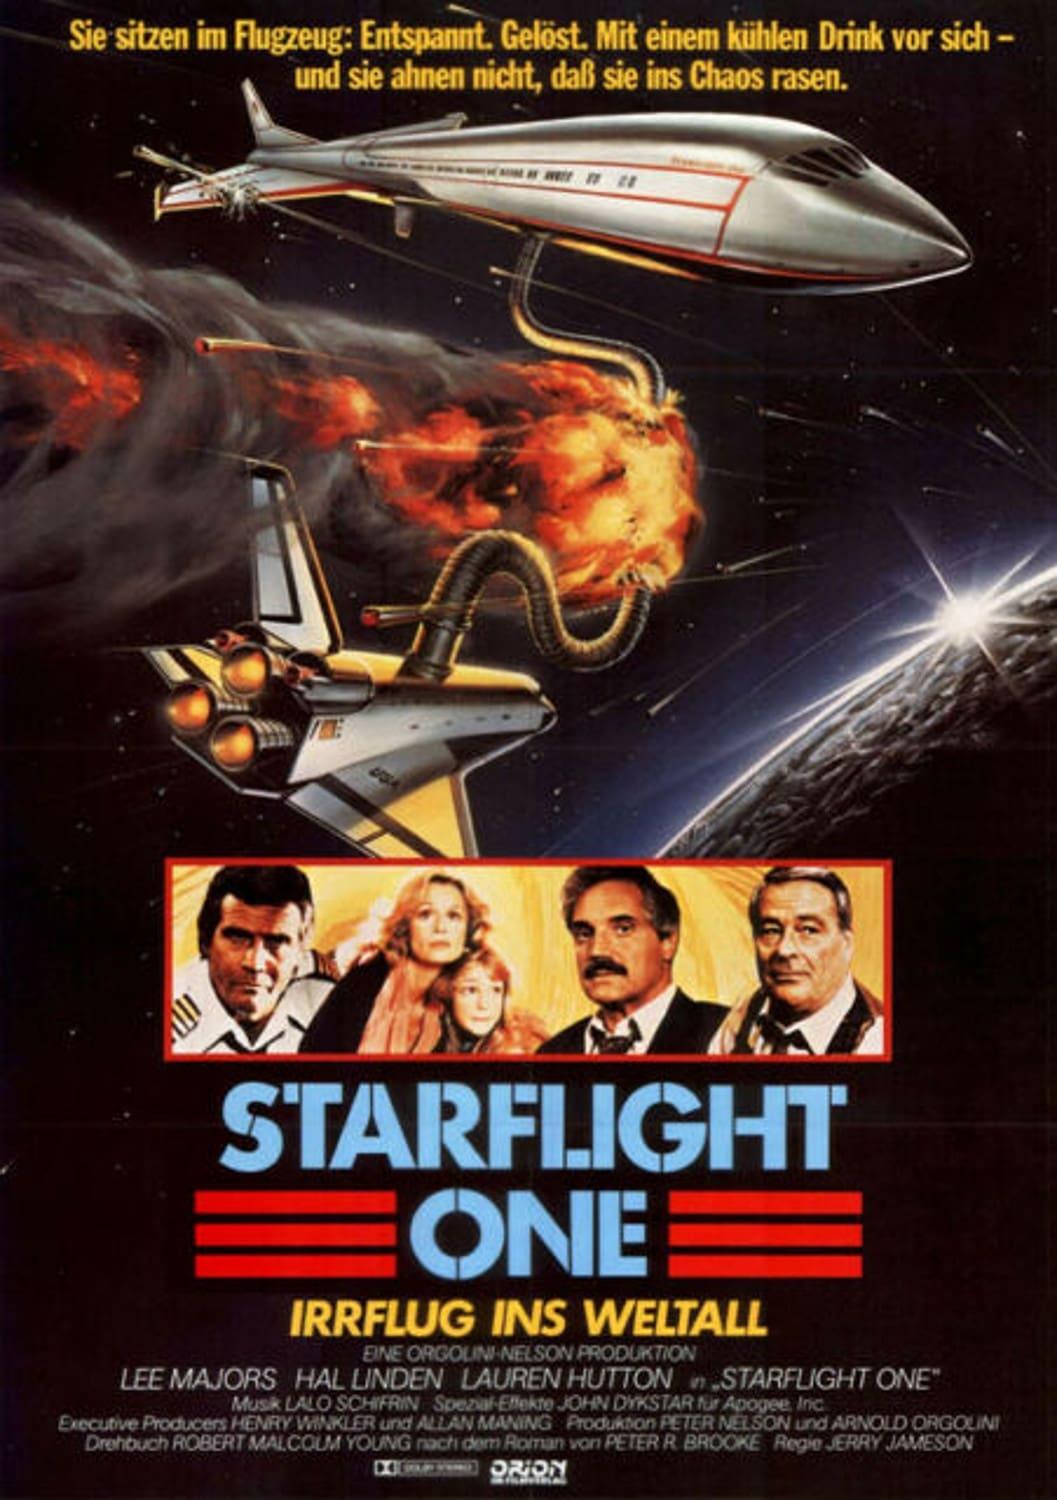 Starflight One - Irrflug ins Weltall poster